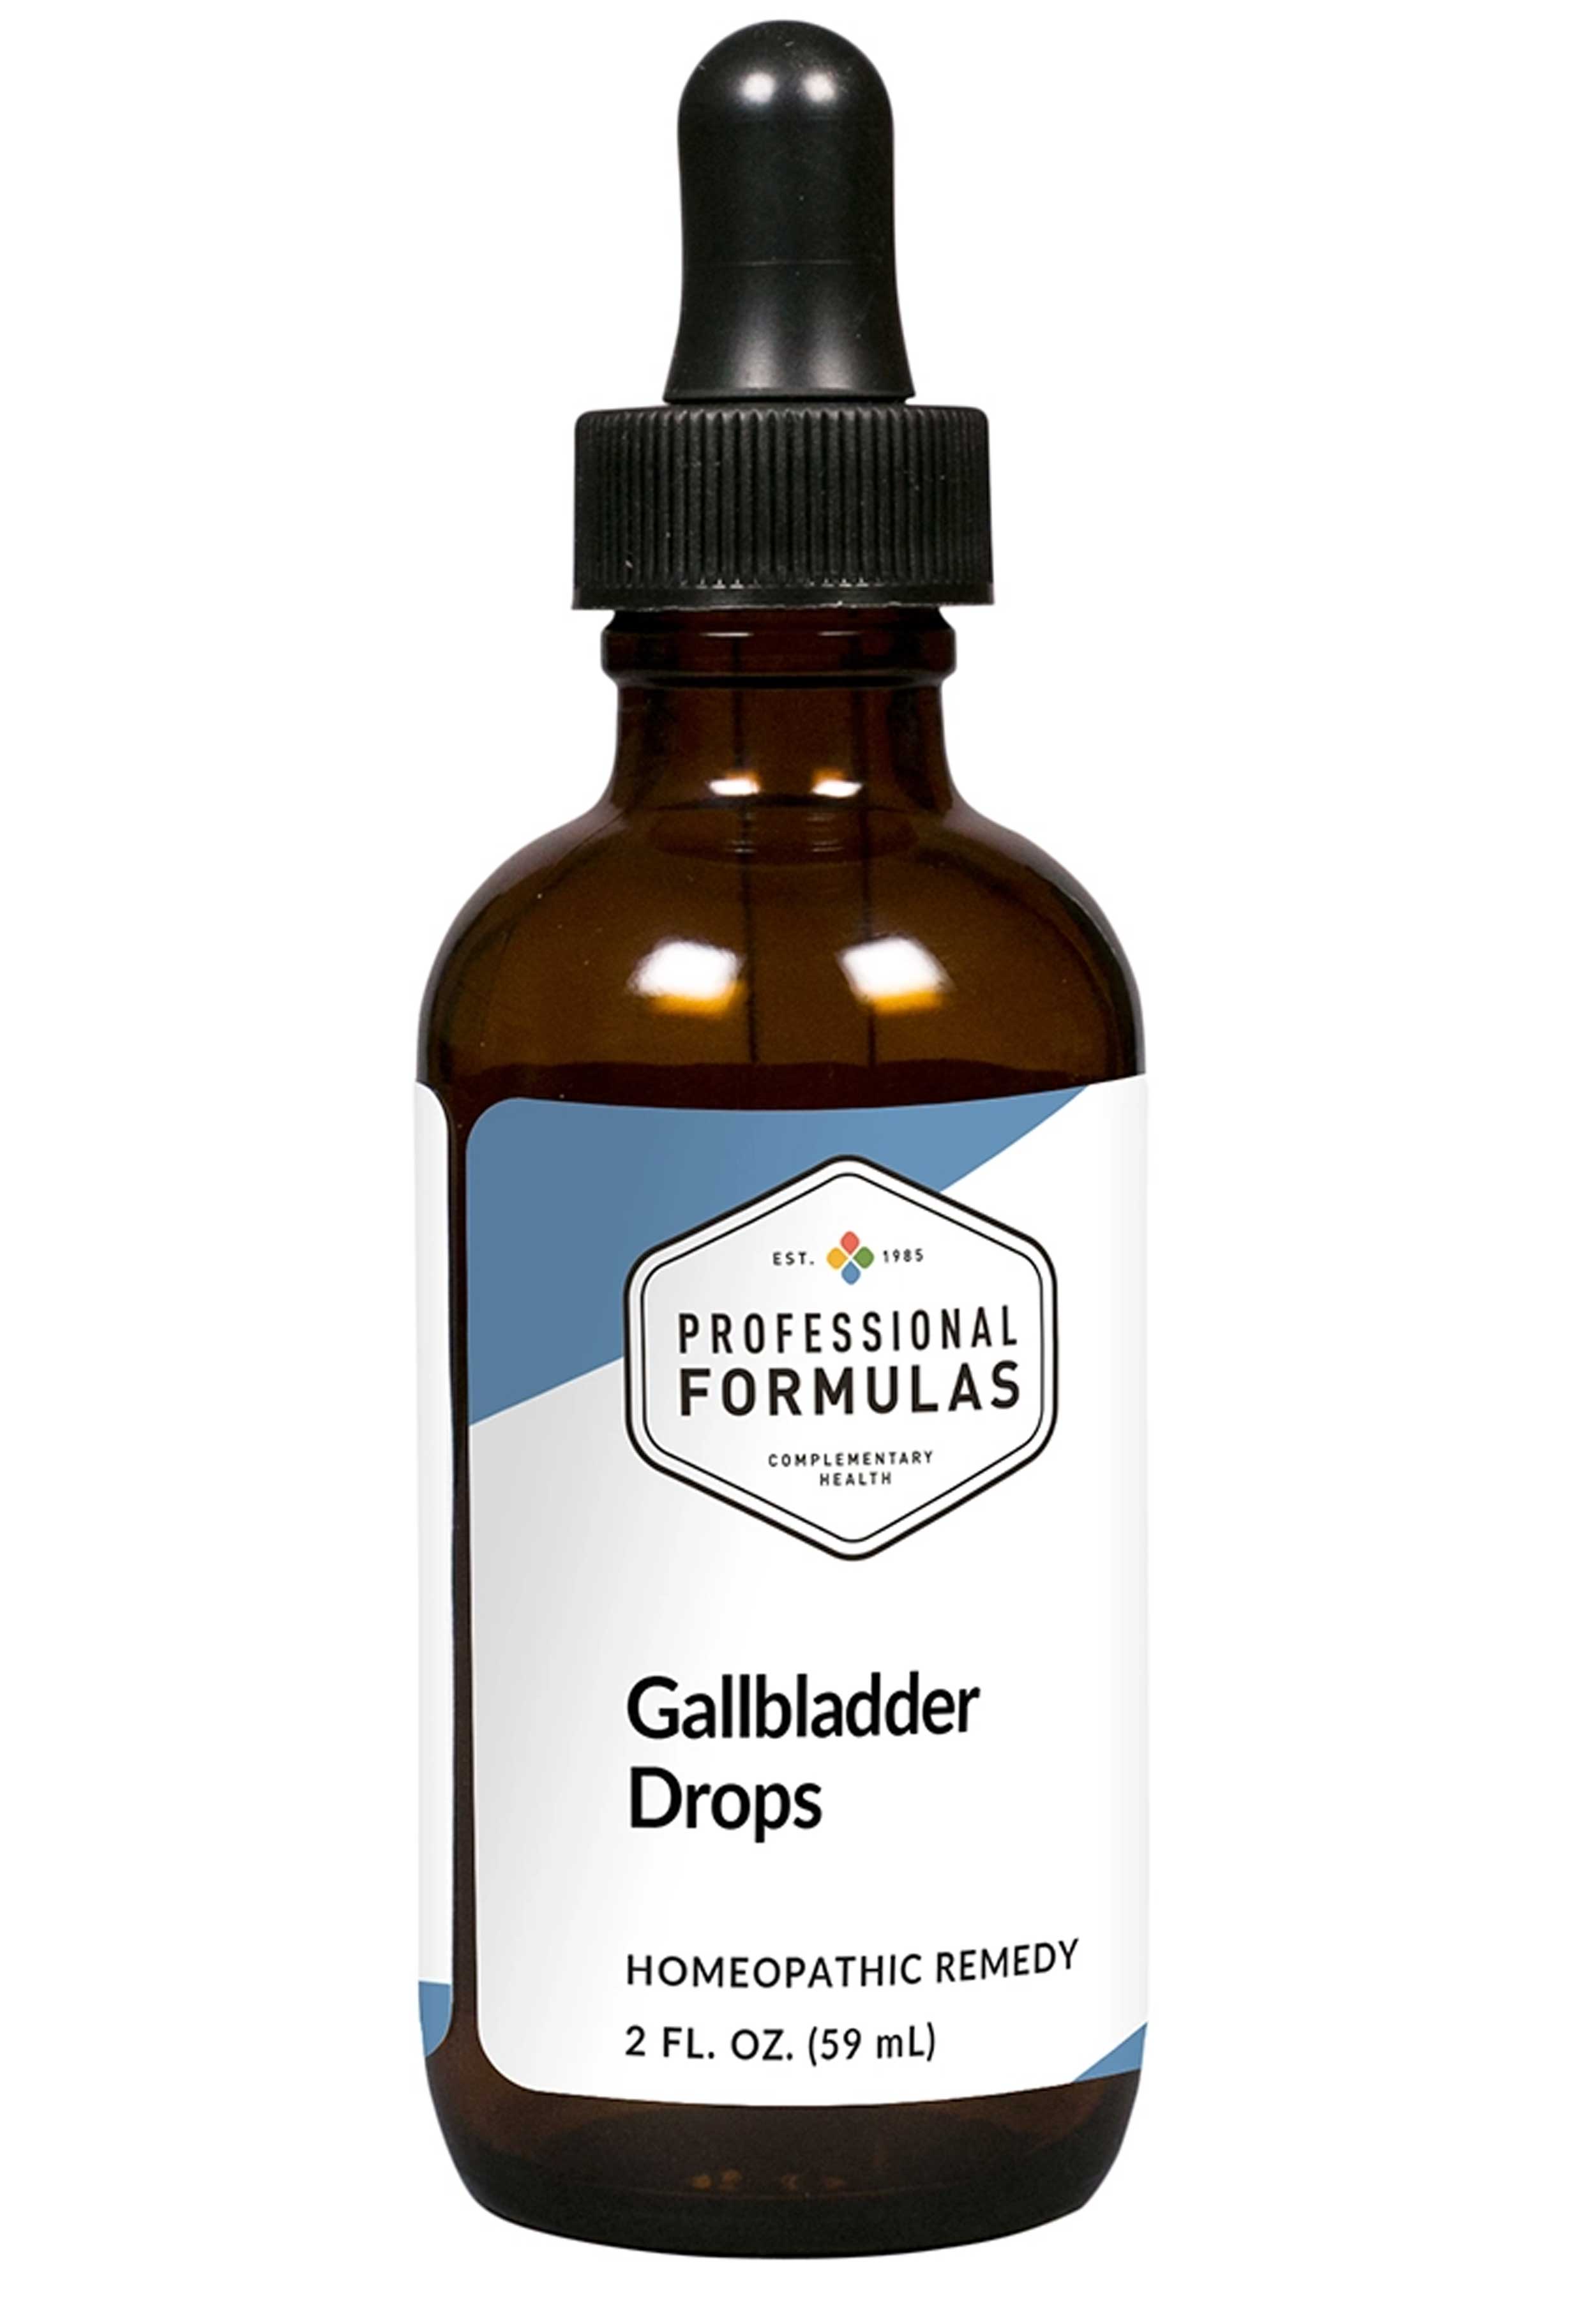 Professional Formulas Gallbladder Drops